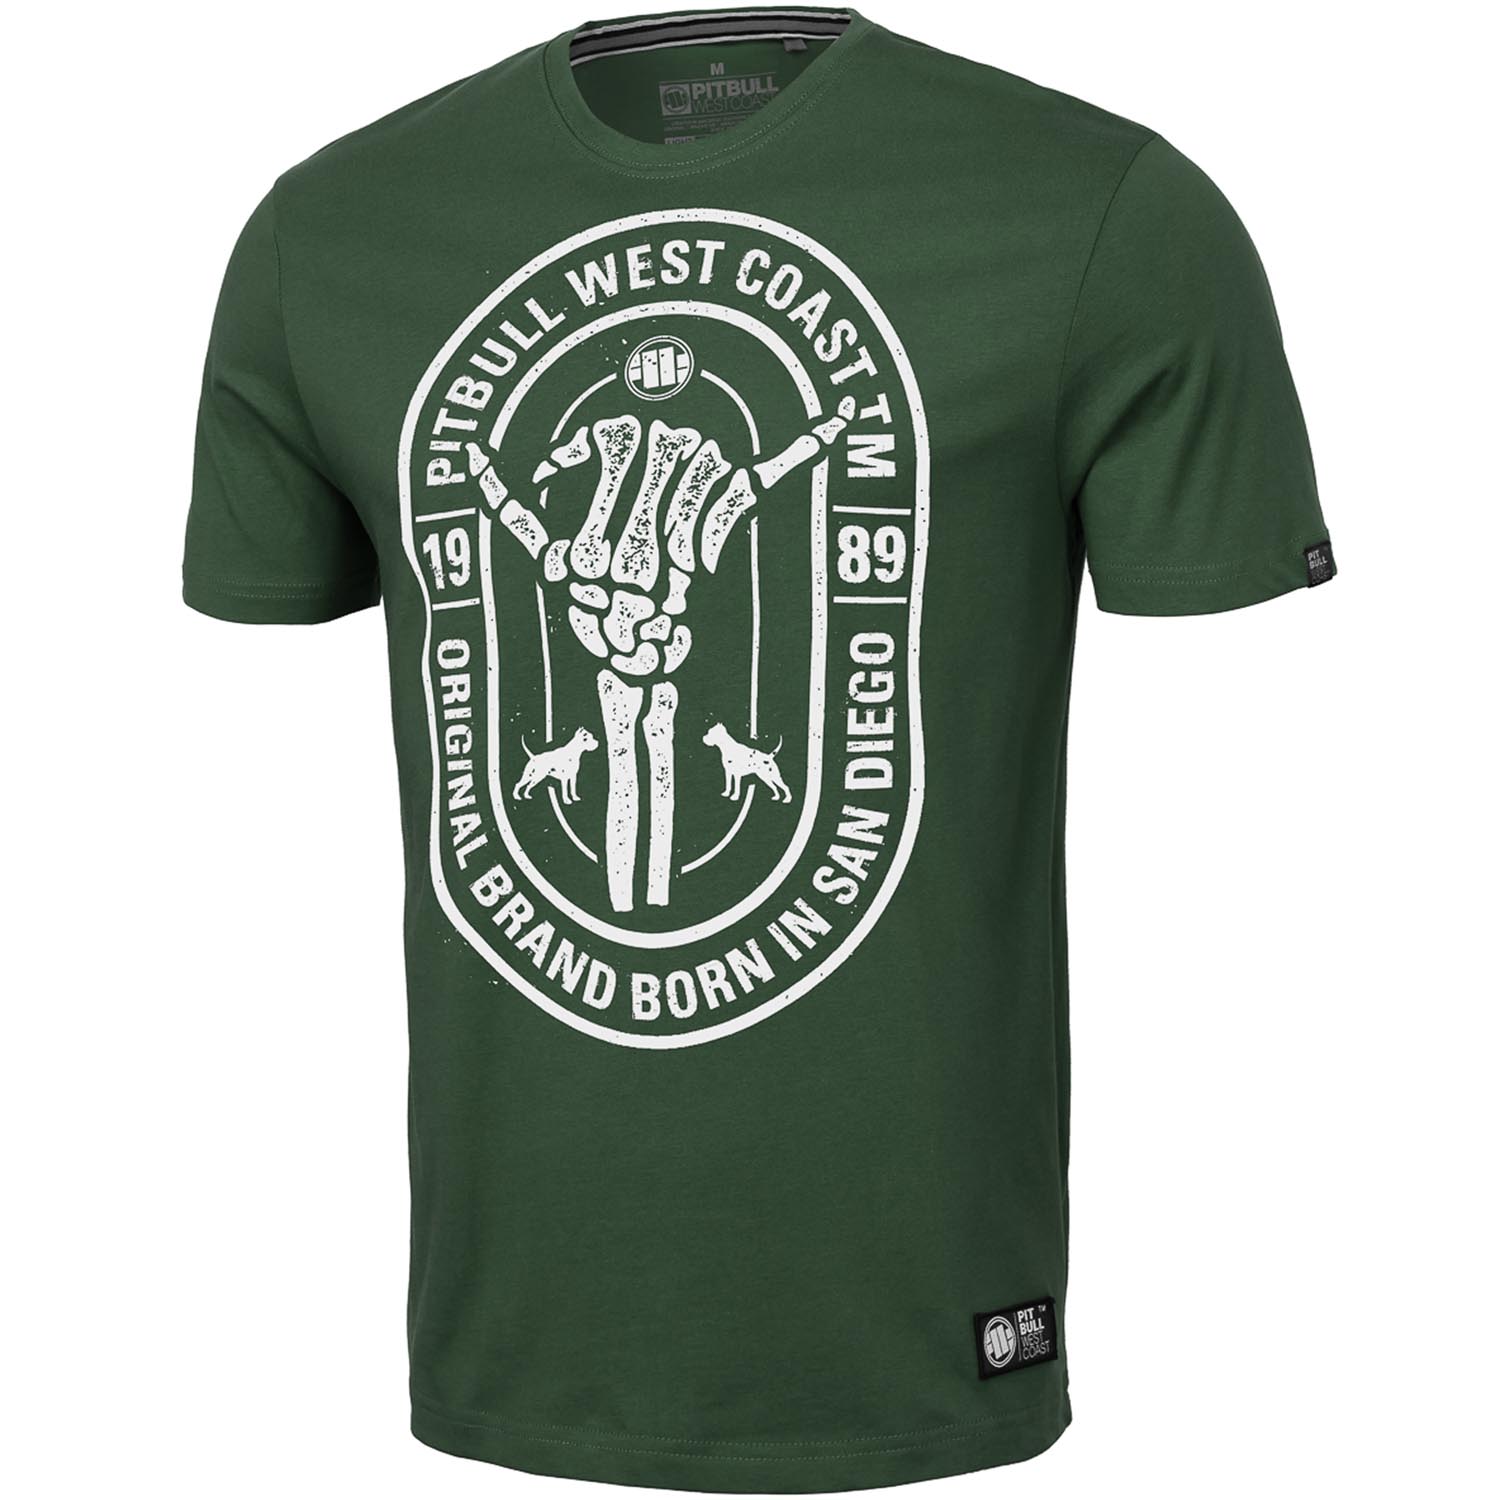 Pit Bull West Coast T-Shirt, Keep Rolling 22, grün